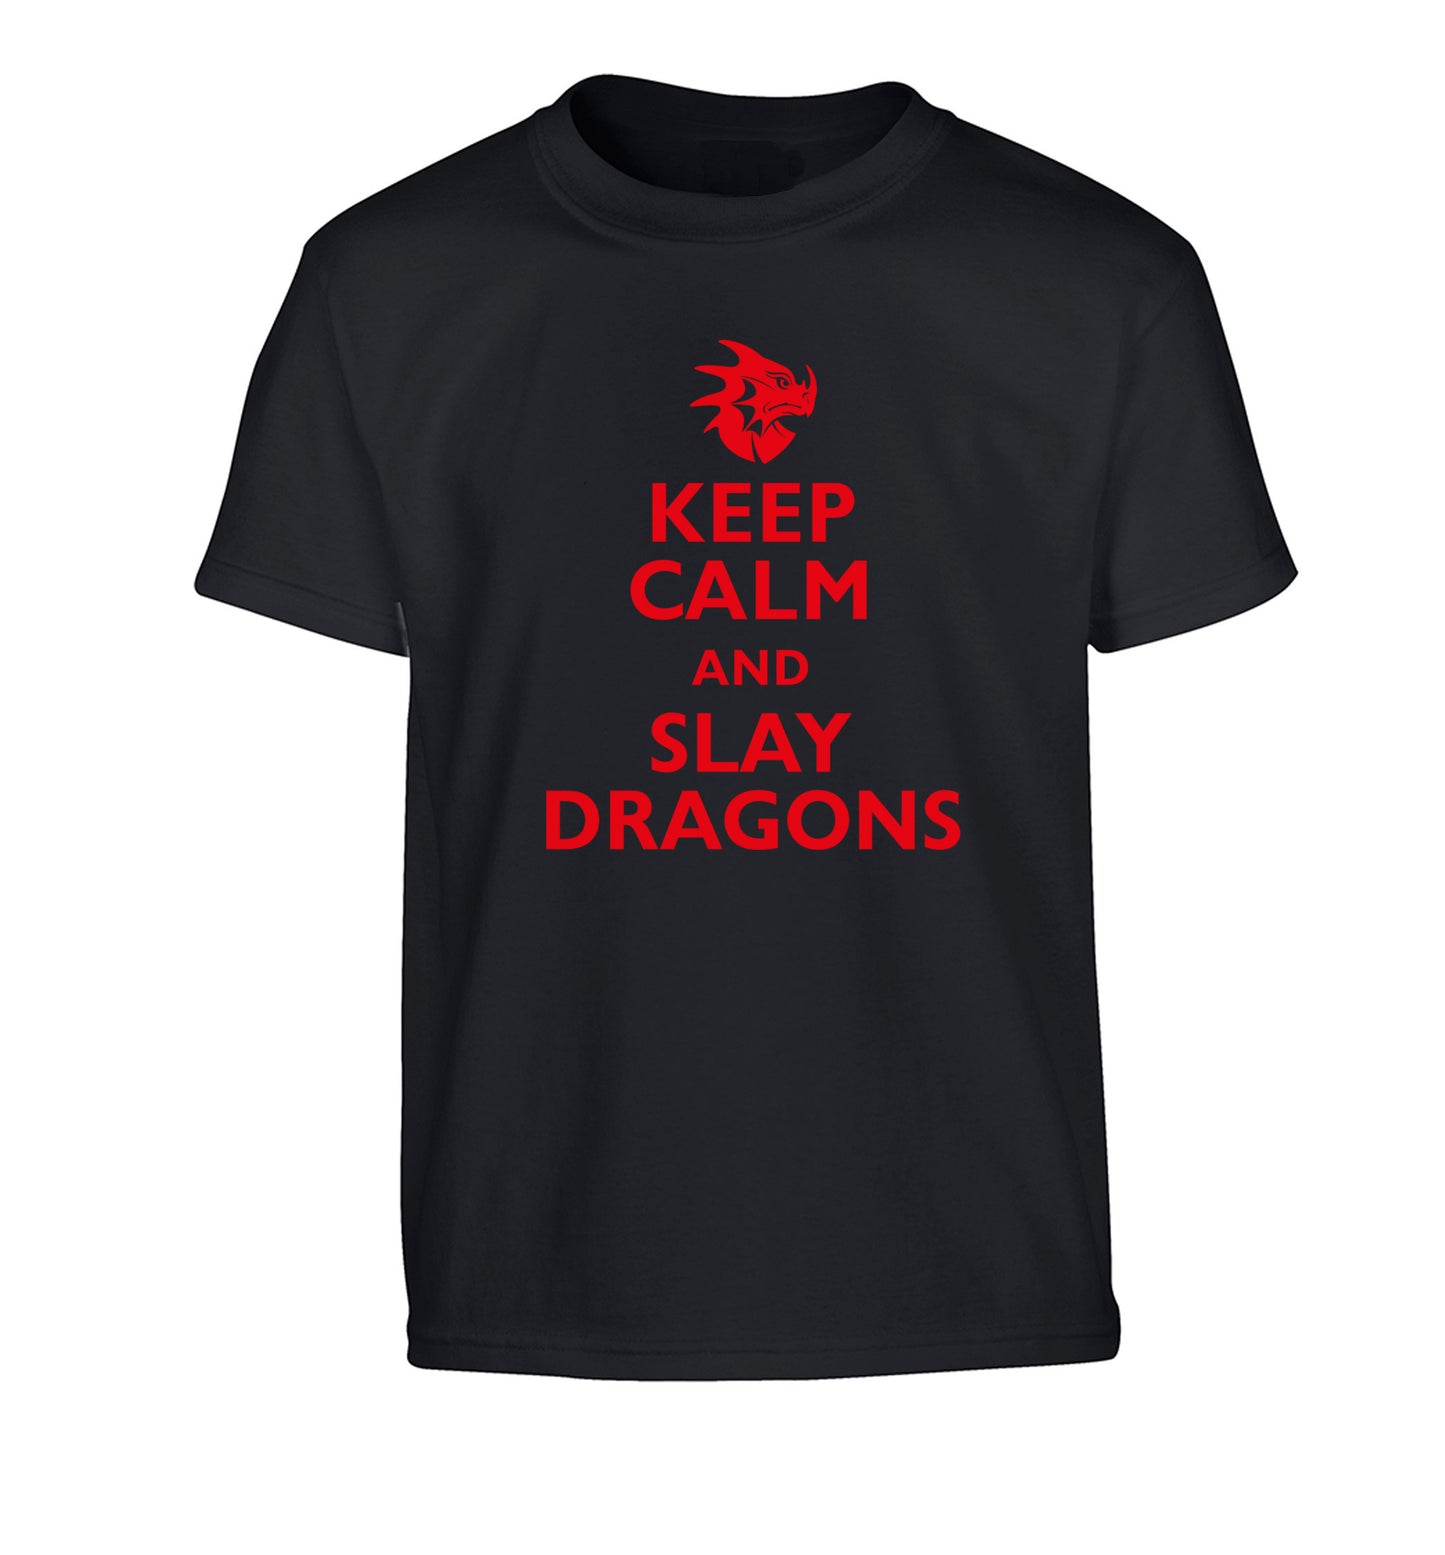 Keep calm and slay dragons Children's black Tshirt 12-14 Years